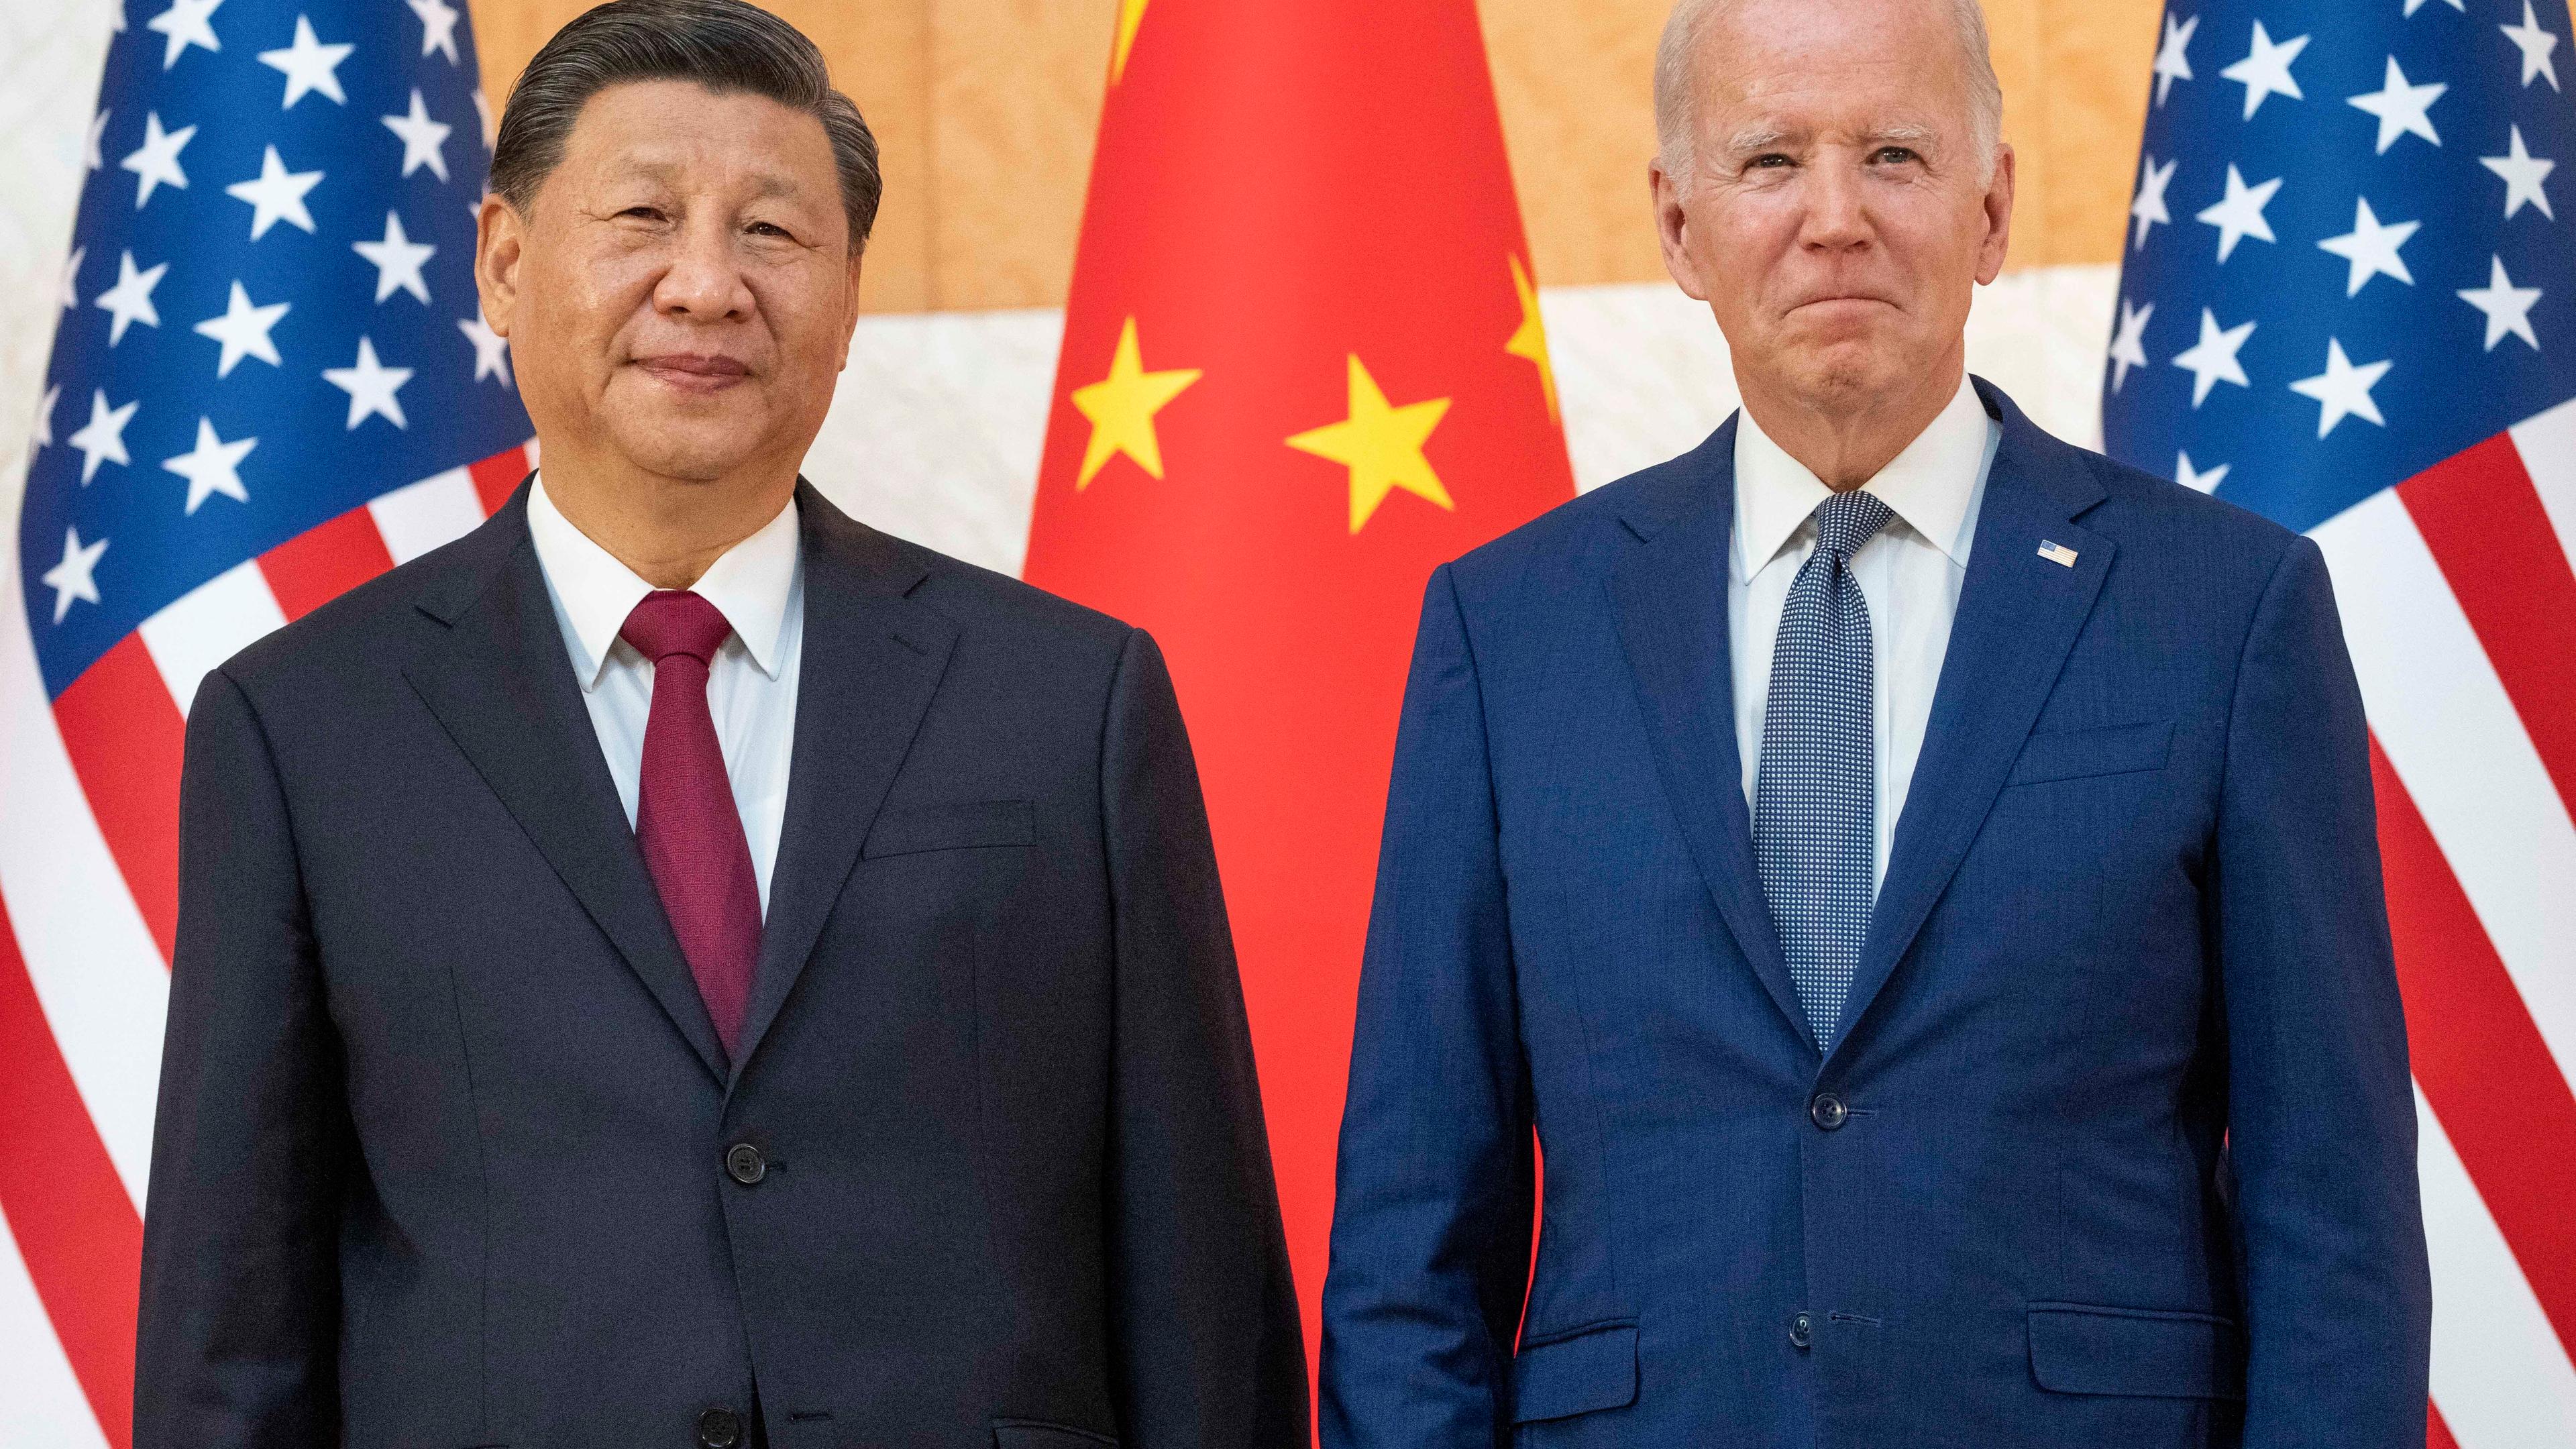 Indonesien, Bali: US-Präsident Joe Biden (r.) steht neben dem chinesischen Präsidenten Xi Jinping